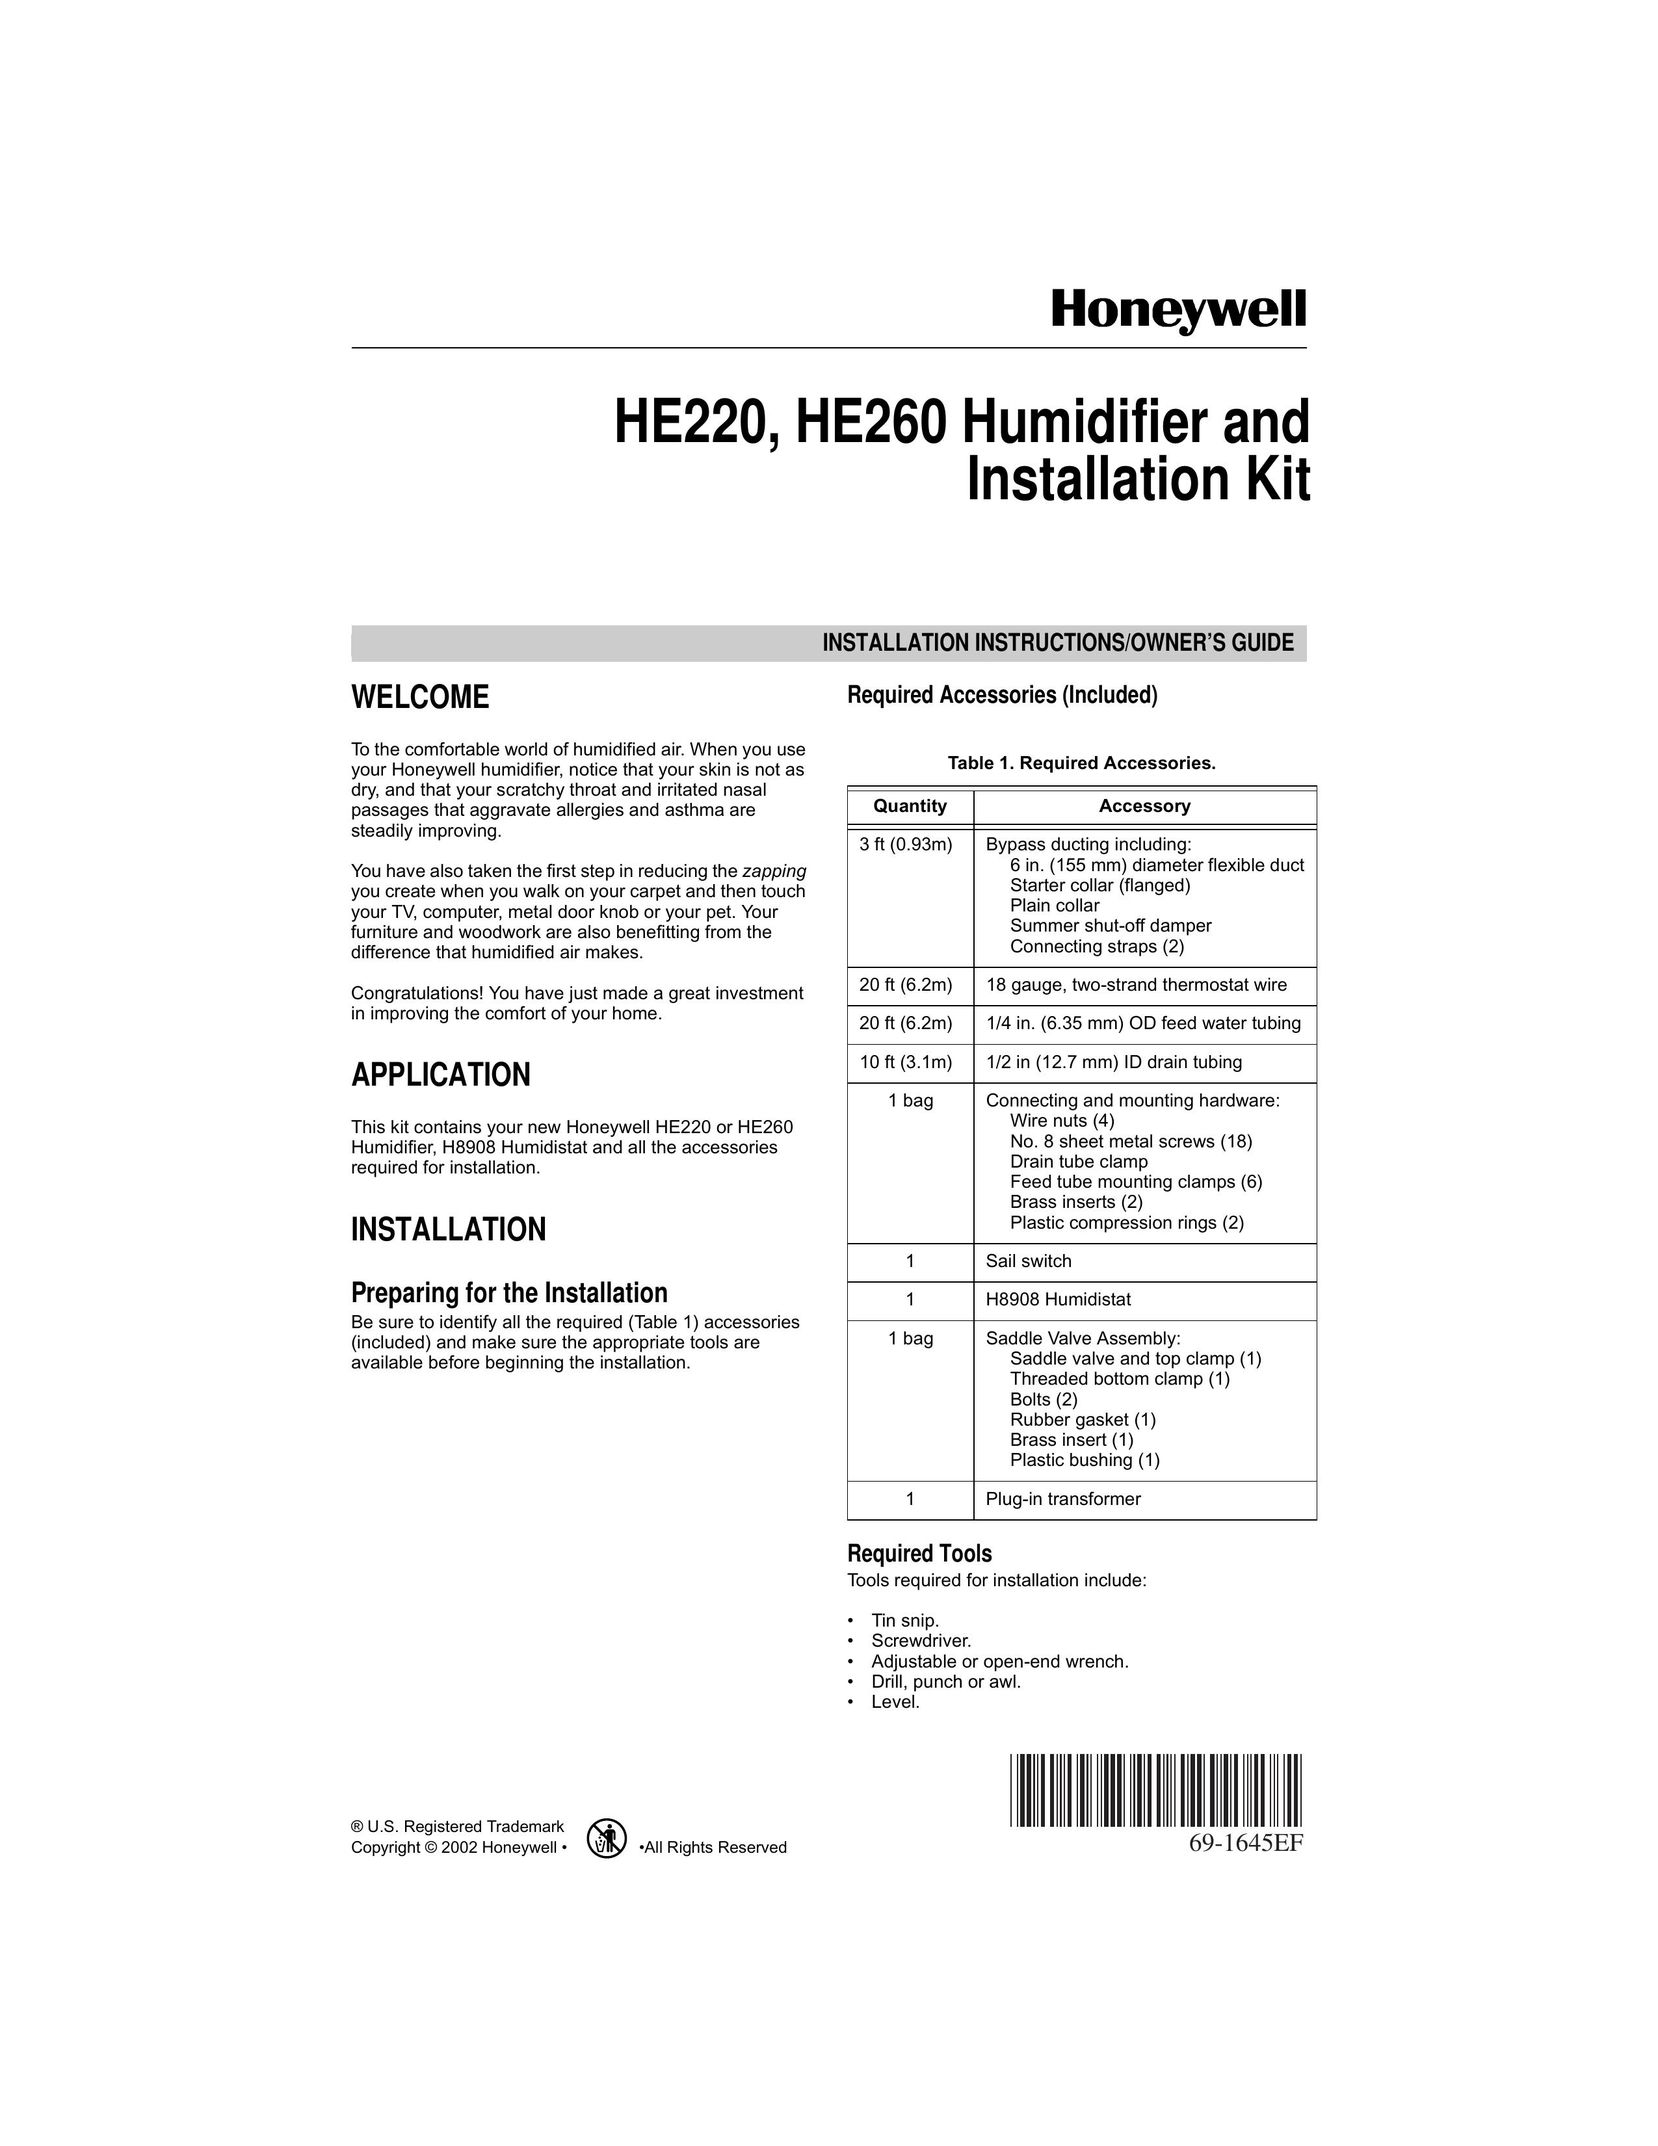 Honeywell HE260 Humidifier User Manual